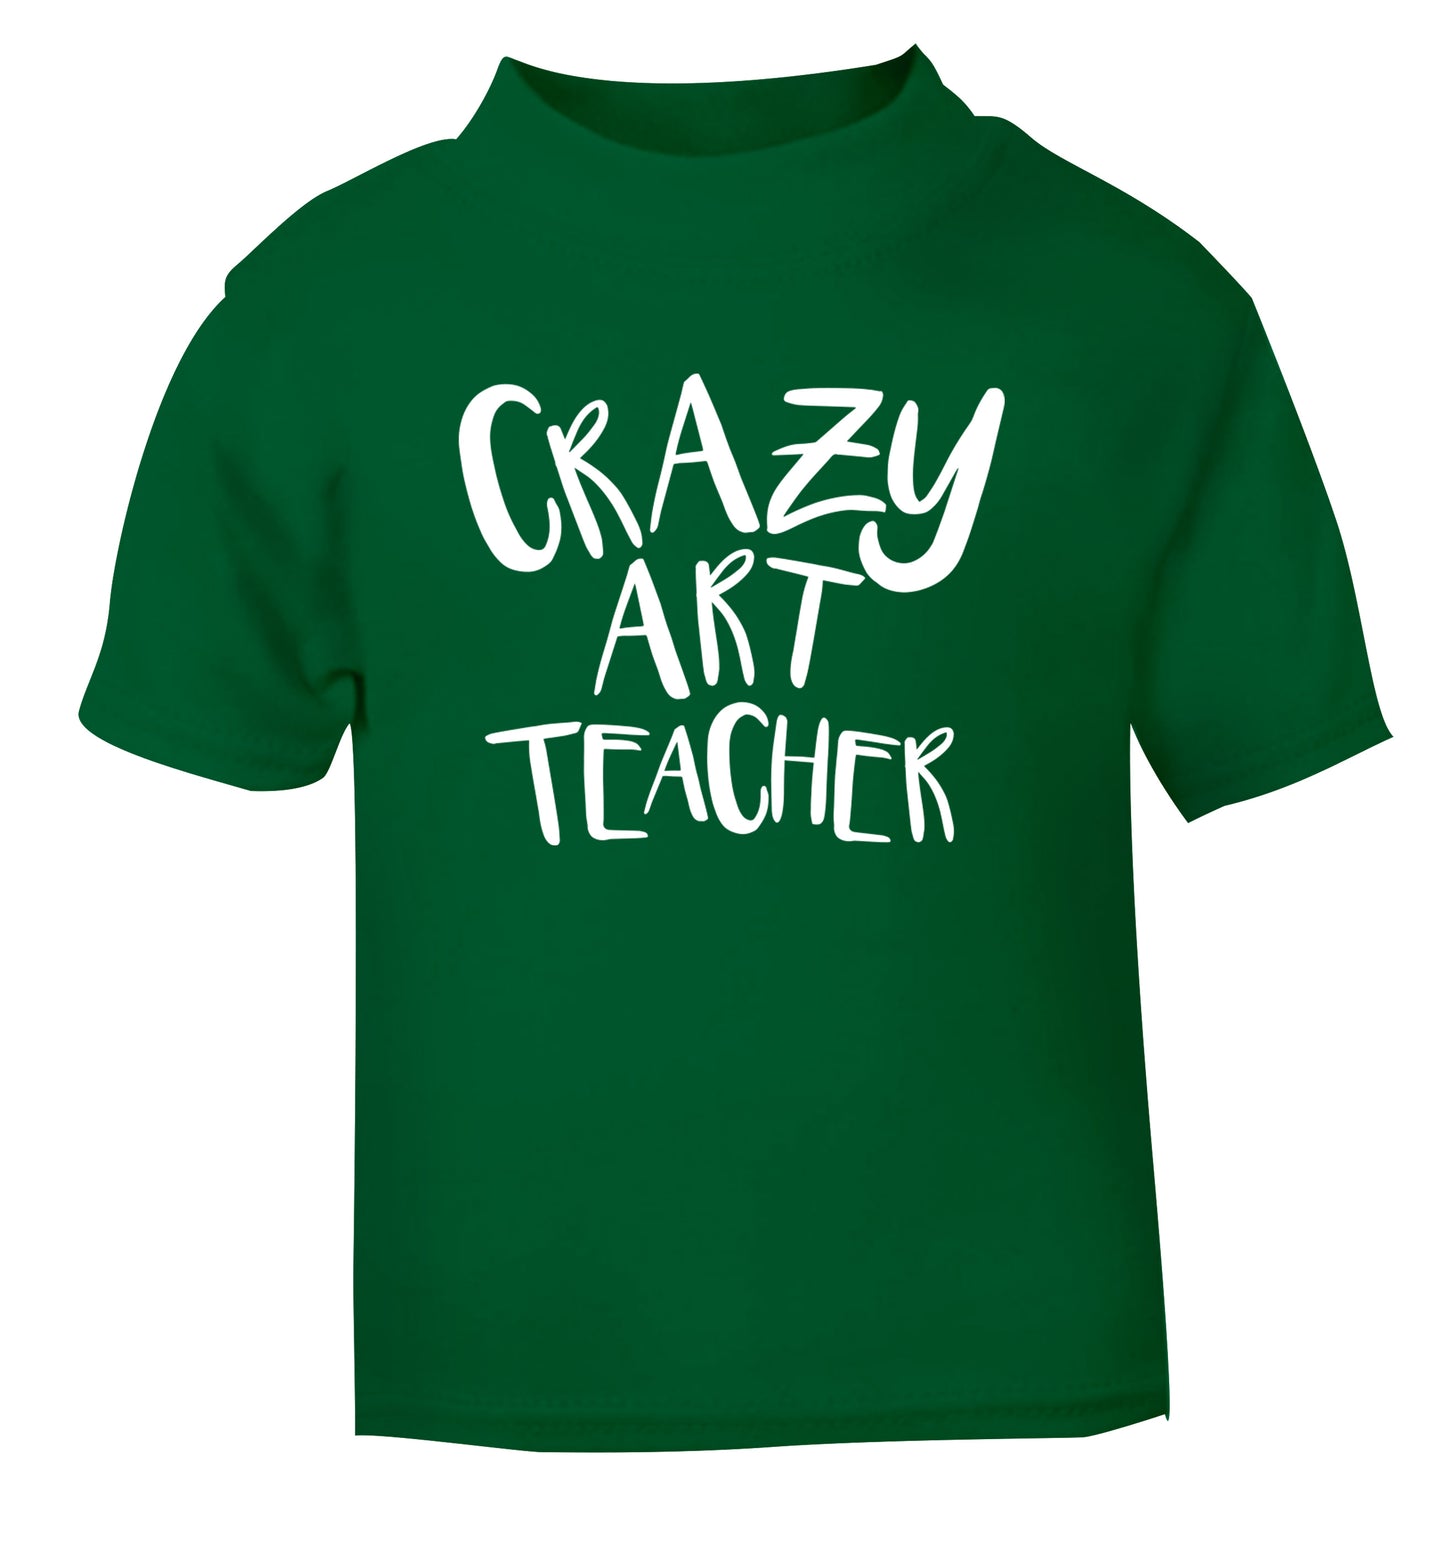 Crazy art teacher green Baby Toddler Tshirt 2 Years